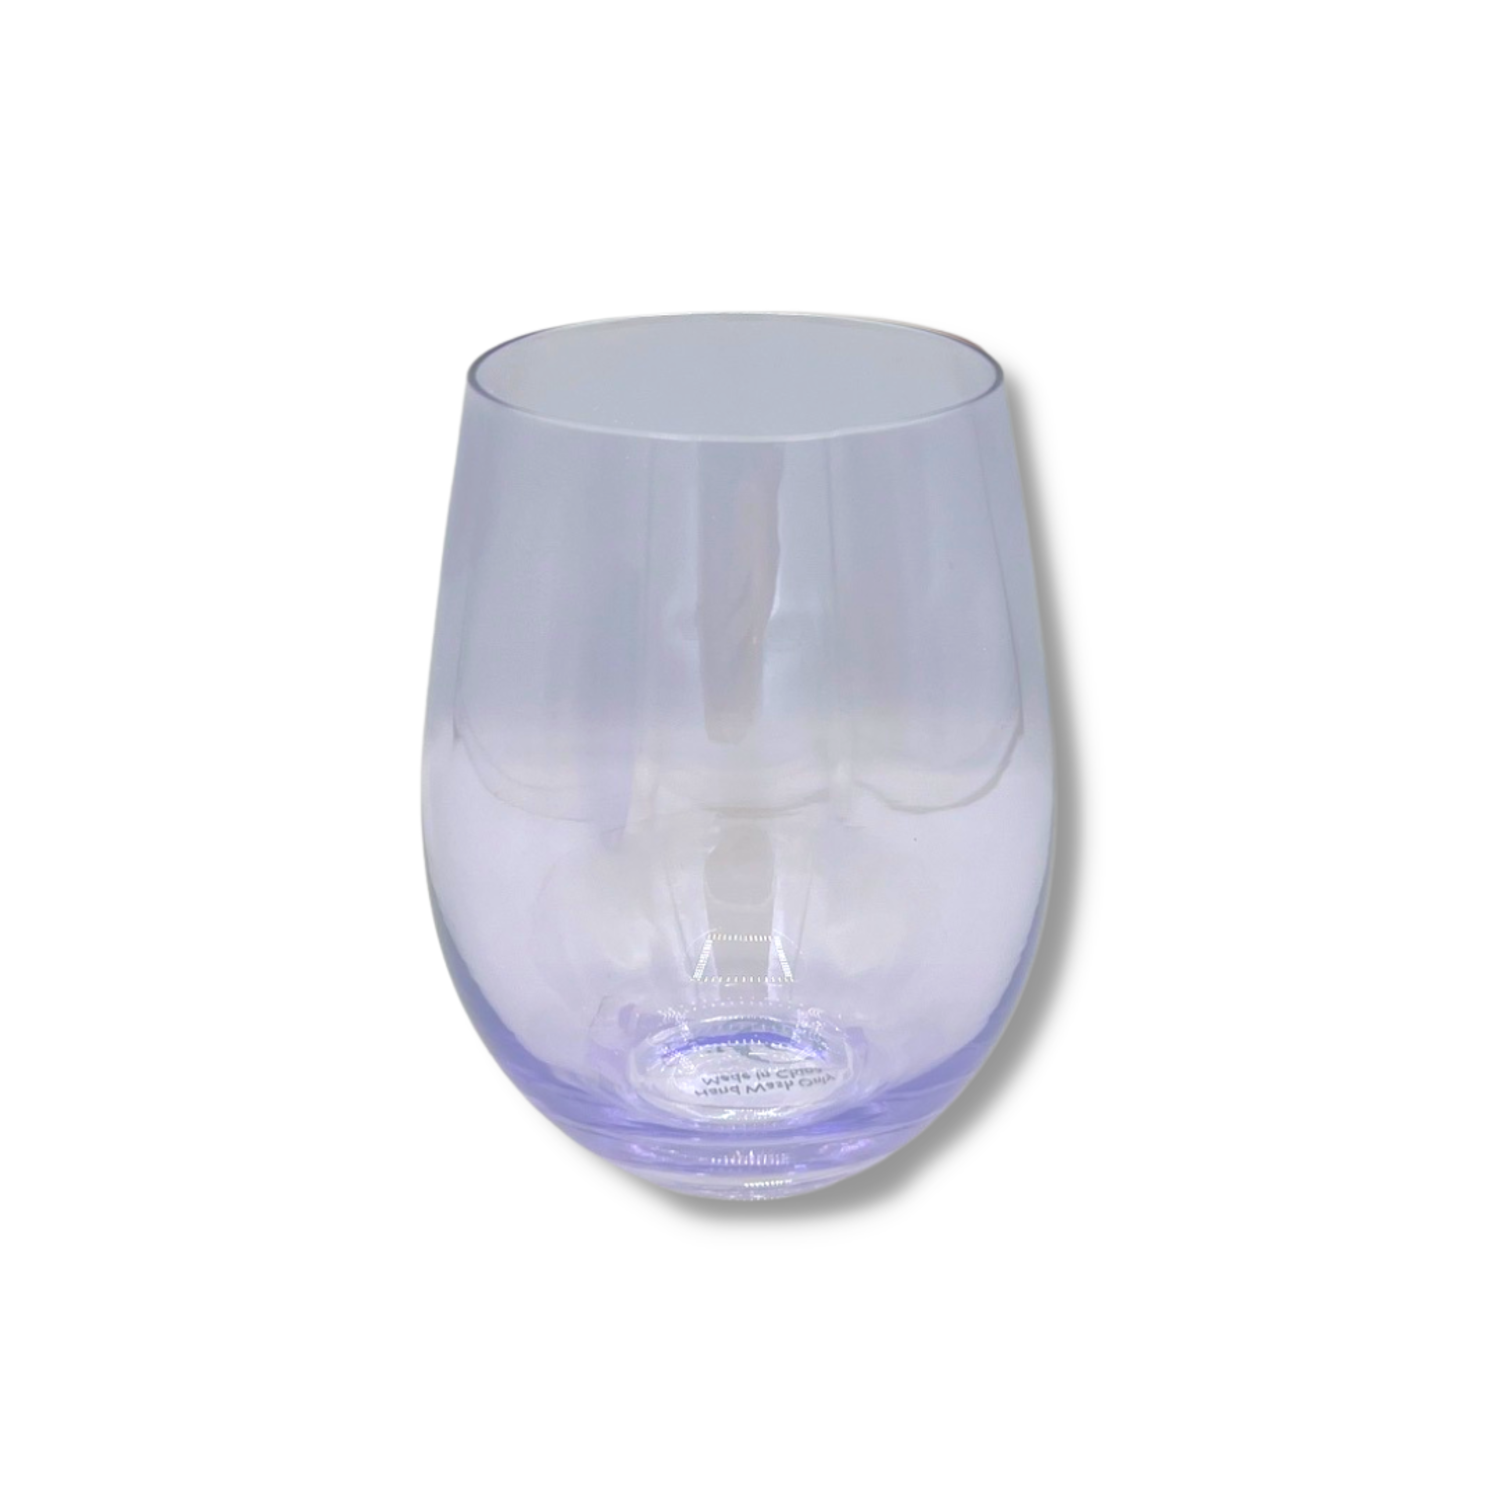 Crackle Stemless Wine Glasses, Plumeria, Set of 4, - Integrity Bottles